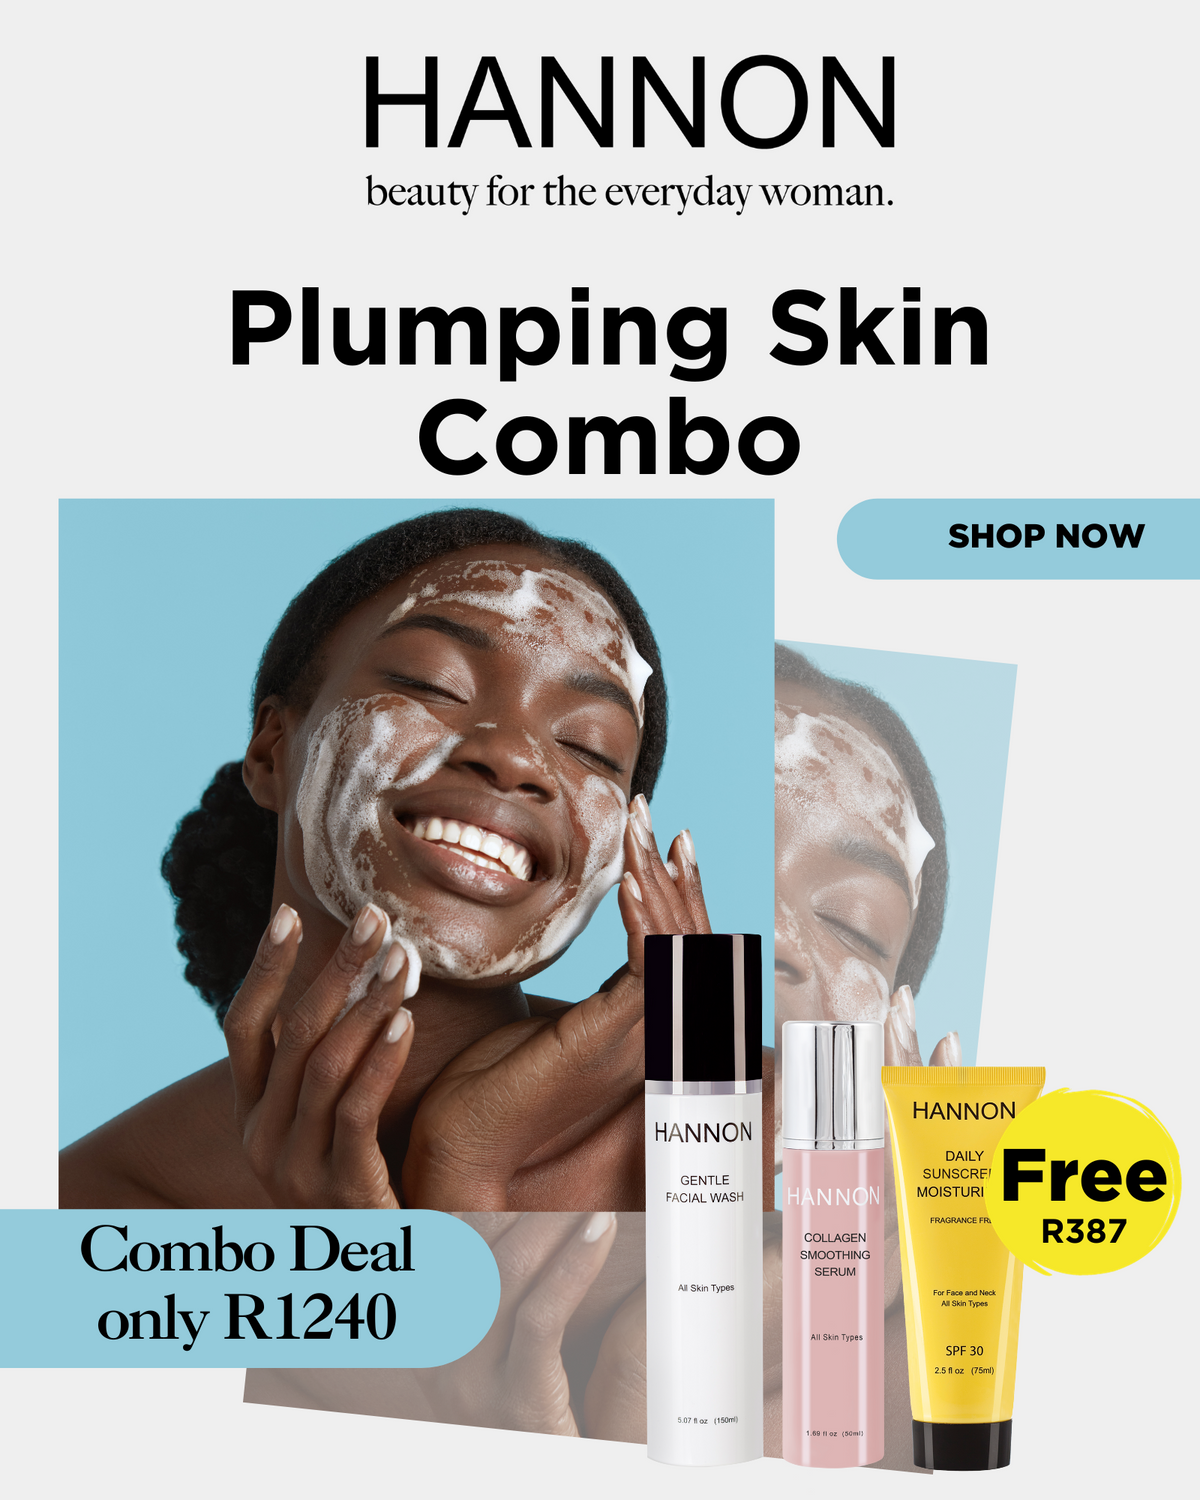 Plumping Skin Combo